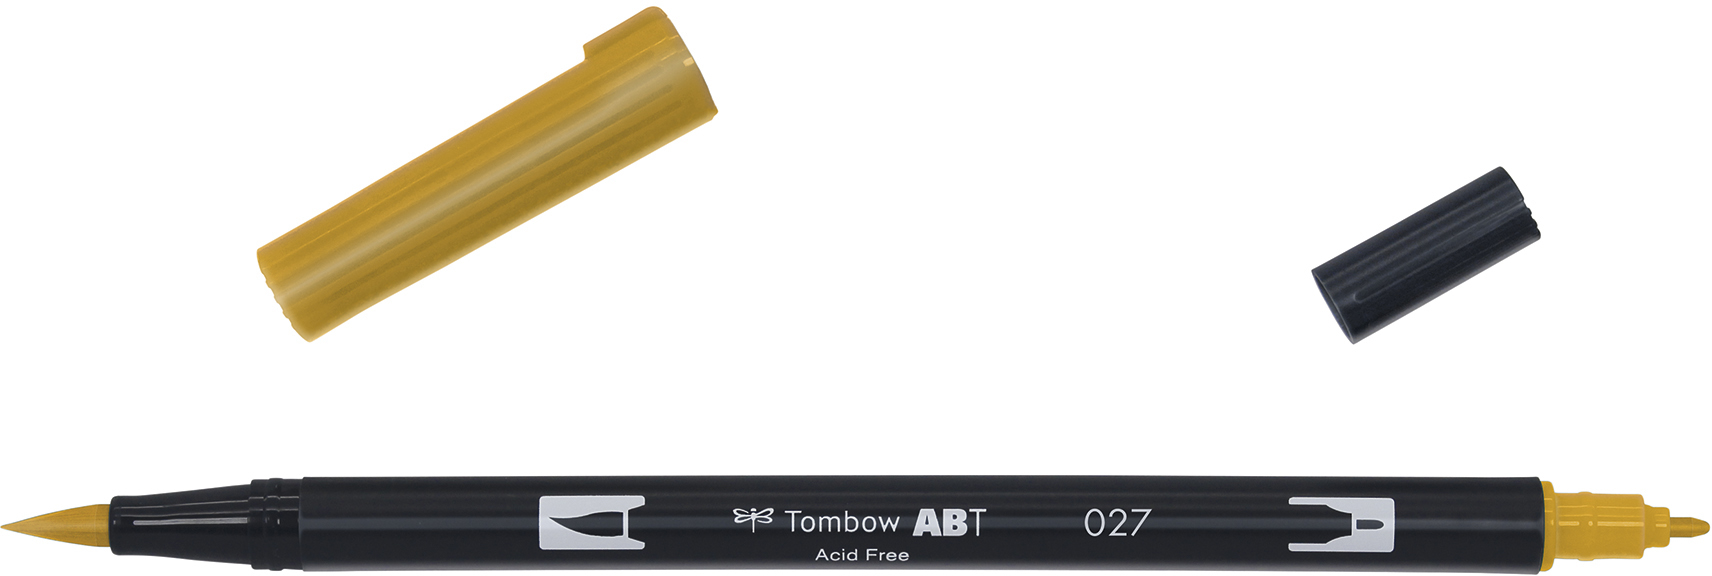 TOMBOW Dual Brush Pen ABT 027 ocre foncé